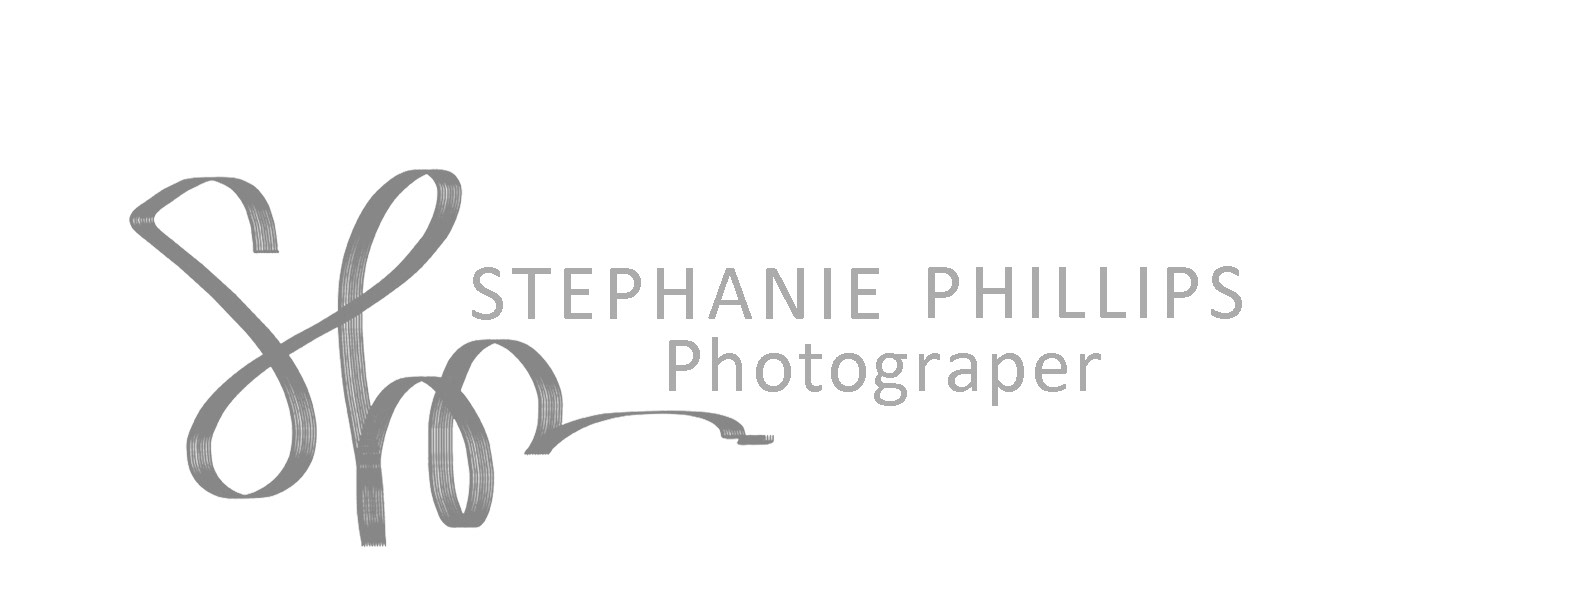 Stephanie Phillips